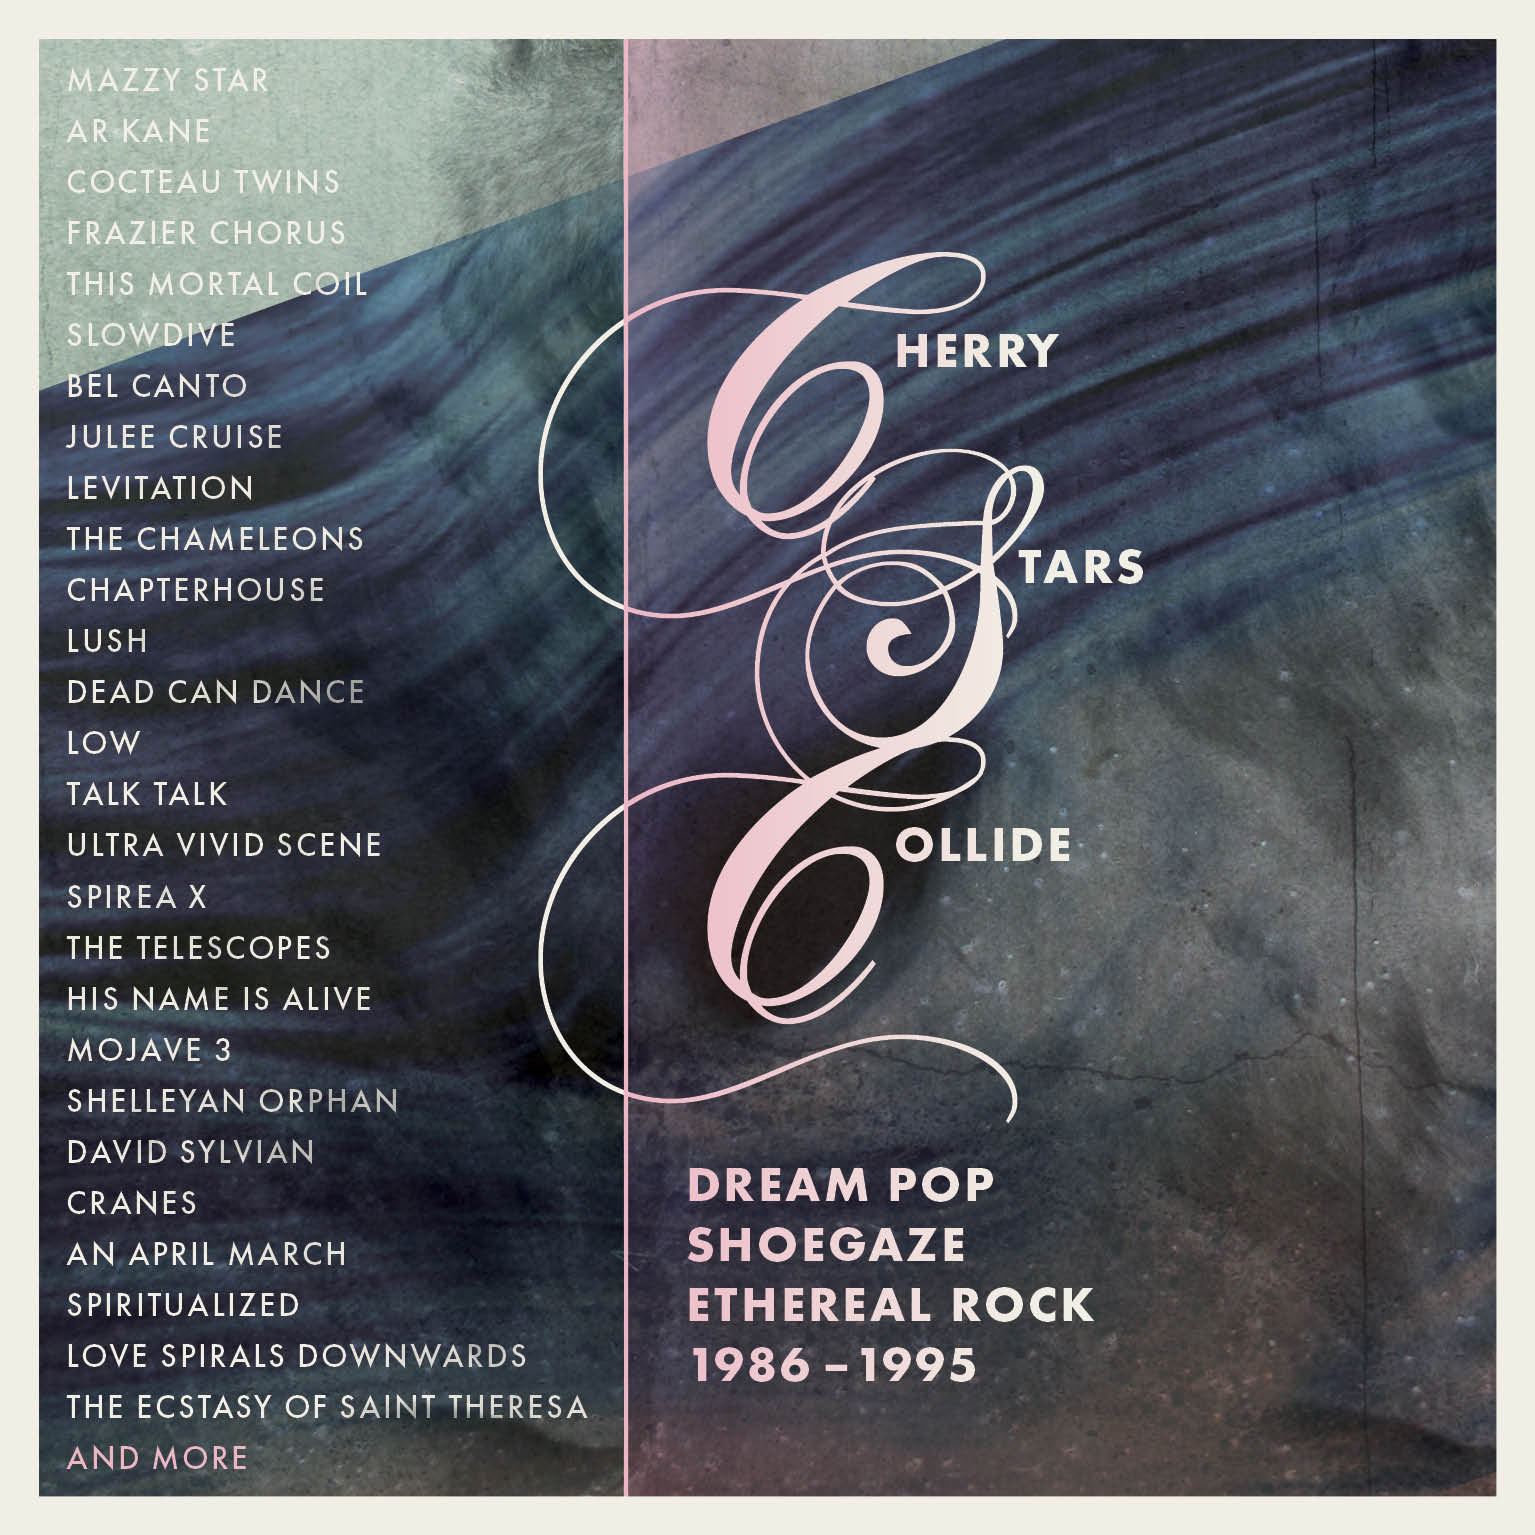 News – Cherry Stars Collide – Dream Pop, Shoegaze & Ethereal Rock 1986-1995